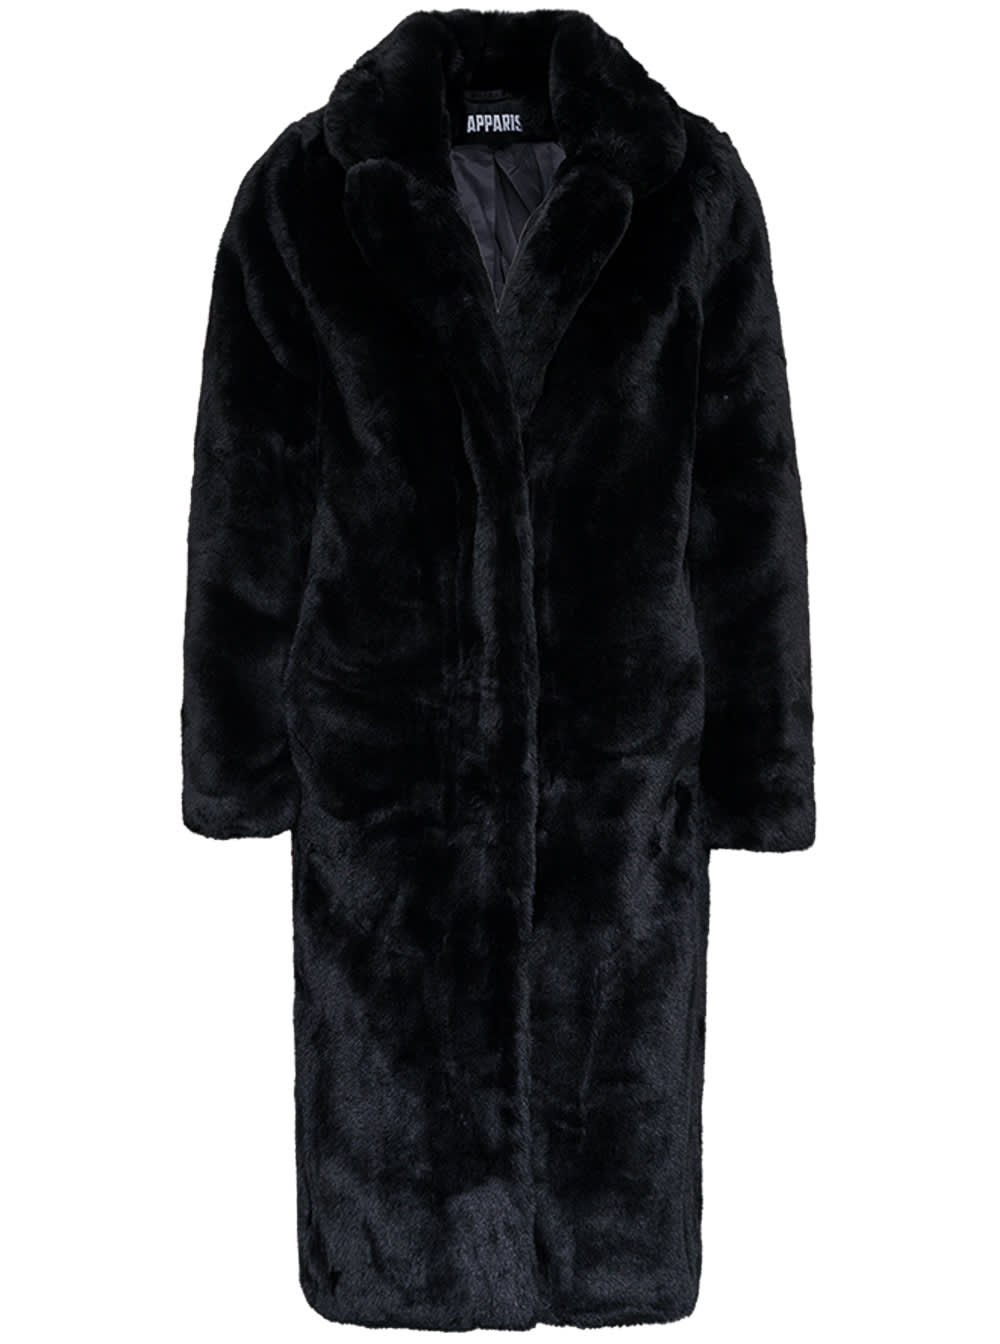 Apparis Scarlet Long Coat In Ecological Black Fur